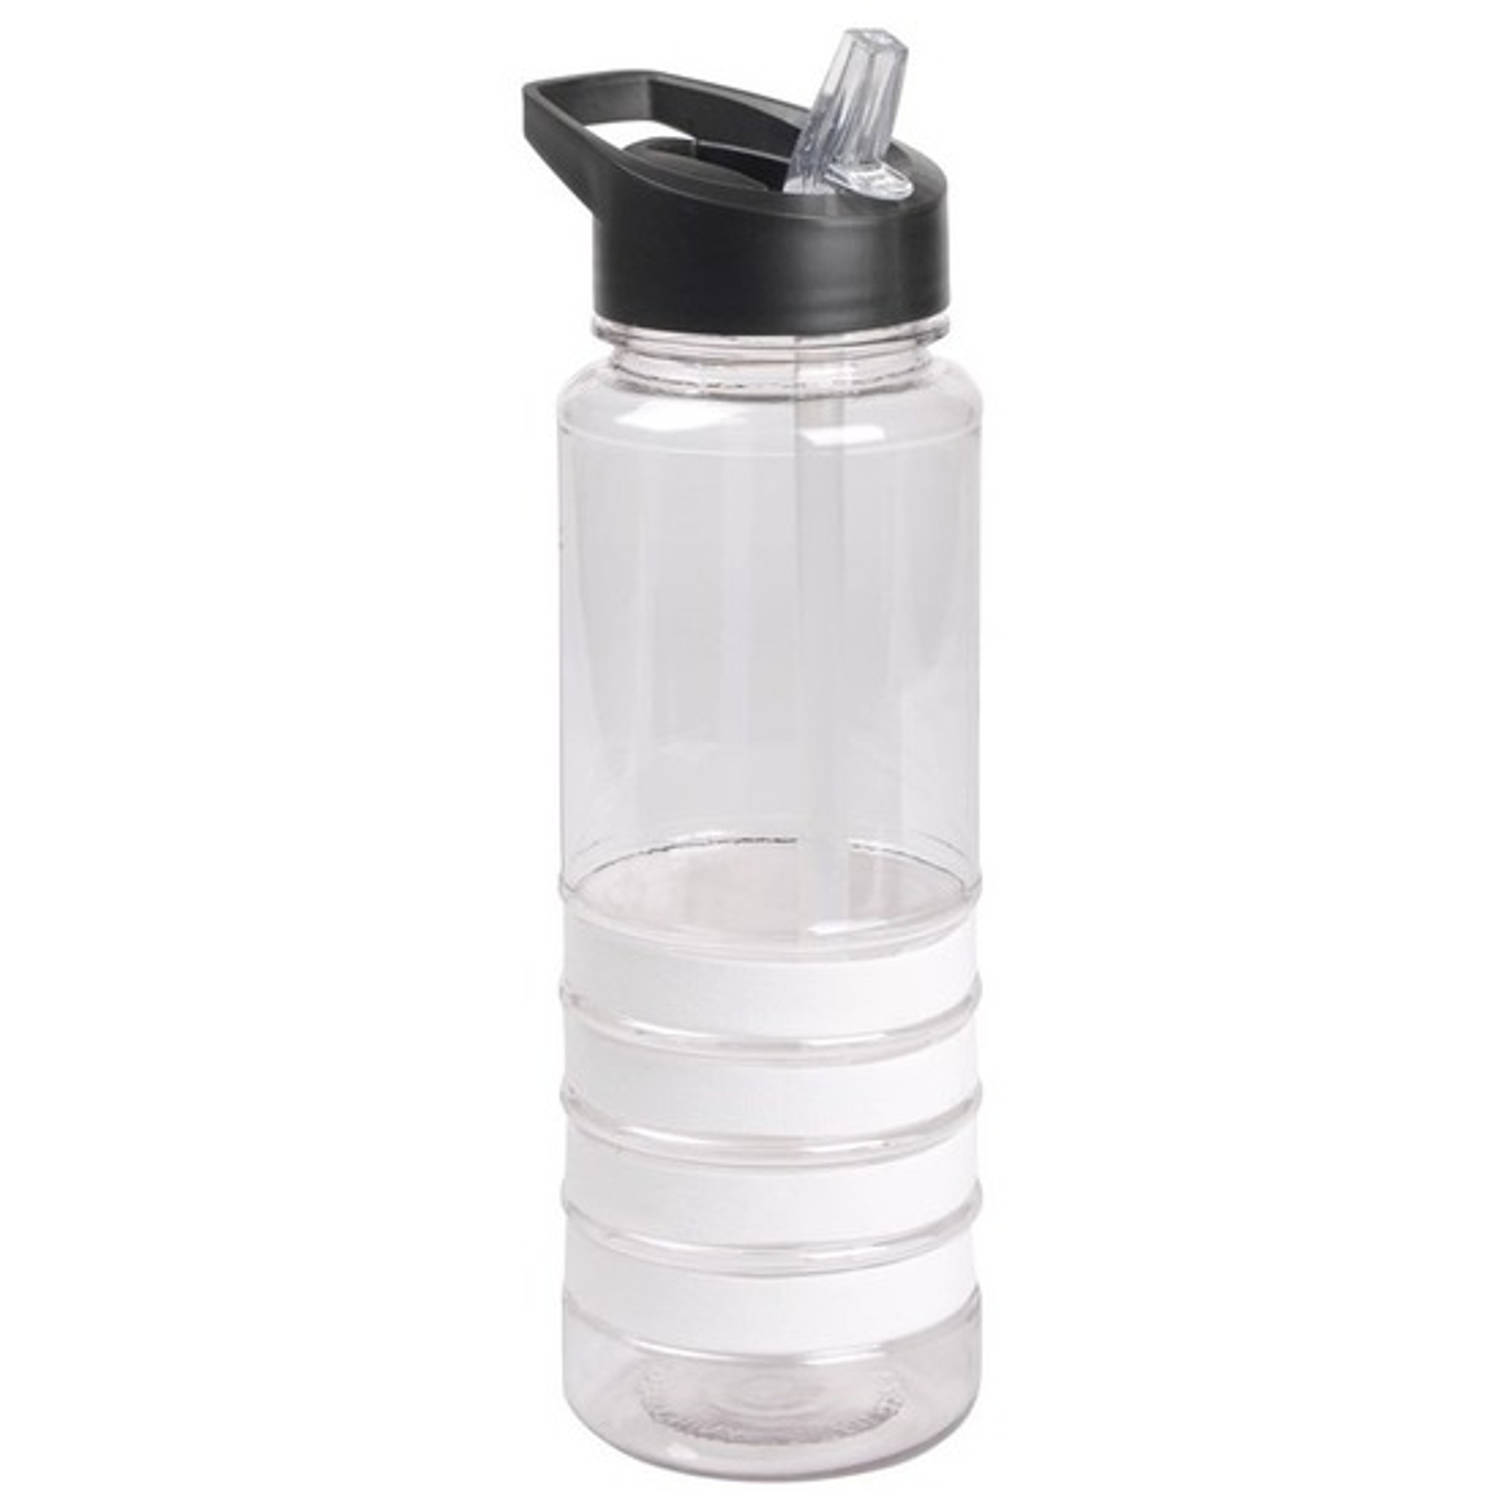 Uitsluiting bungeejumpen overzien Transparant/wit drinkfles/waterfles 750 ml - Drinkflessen | Blokker